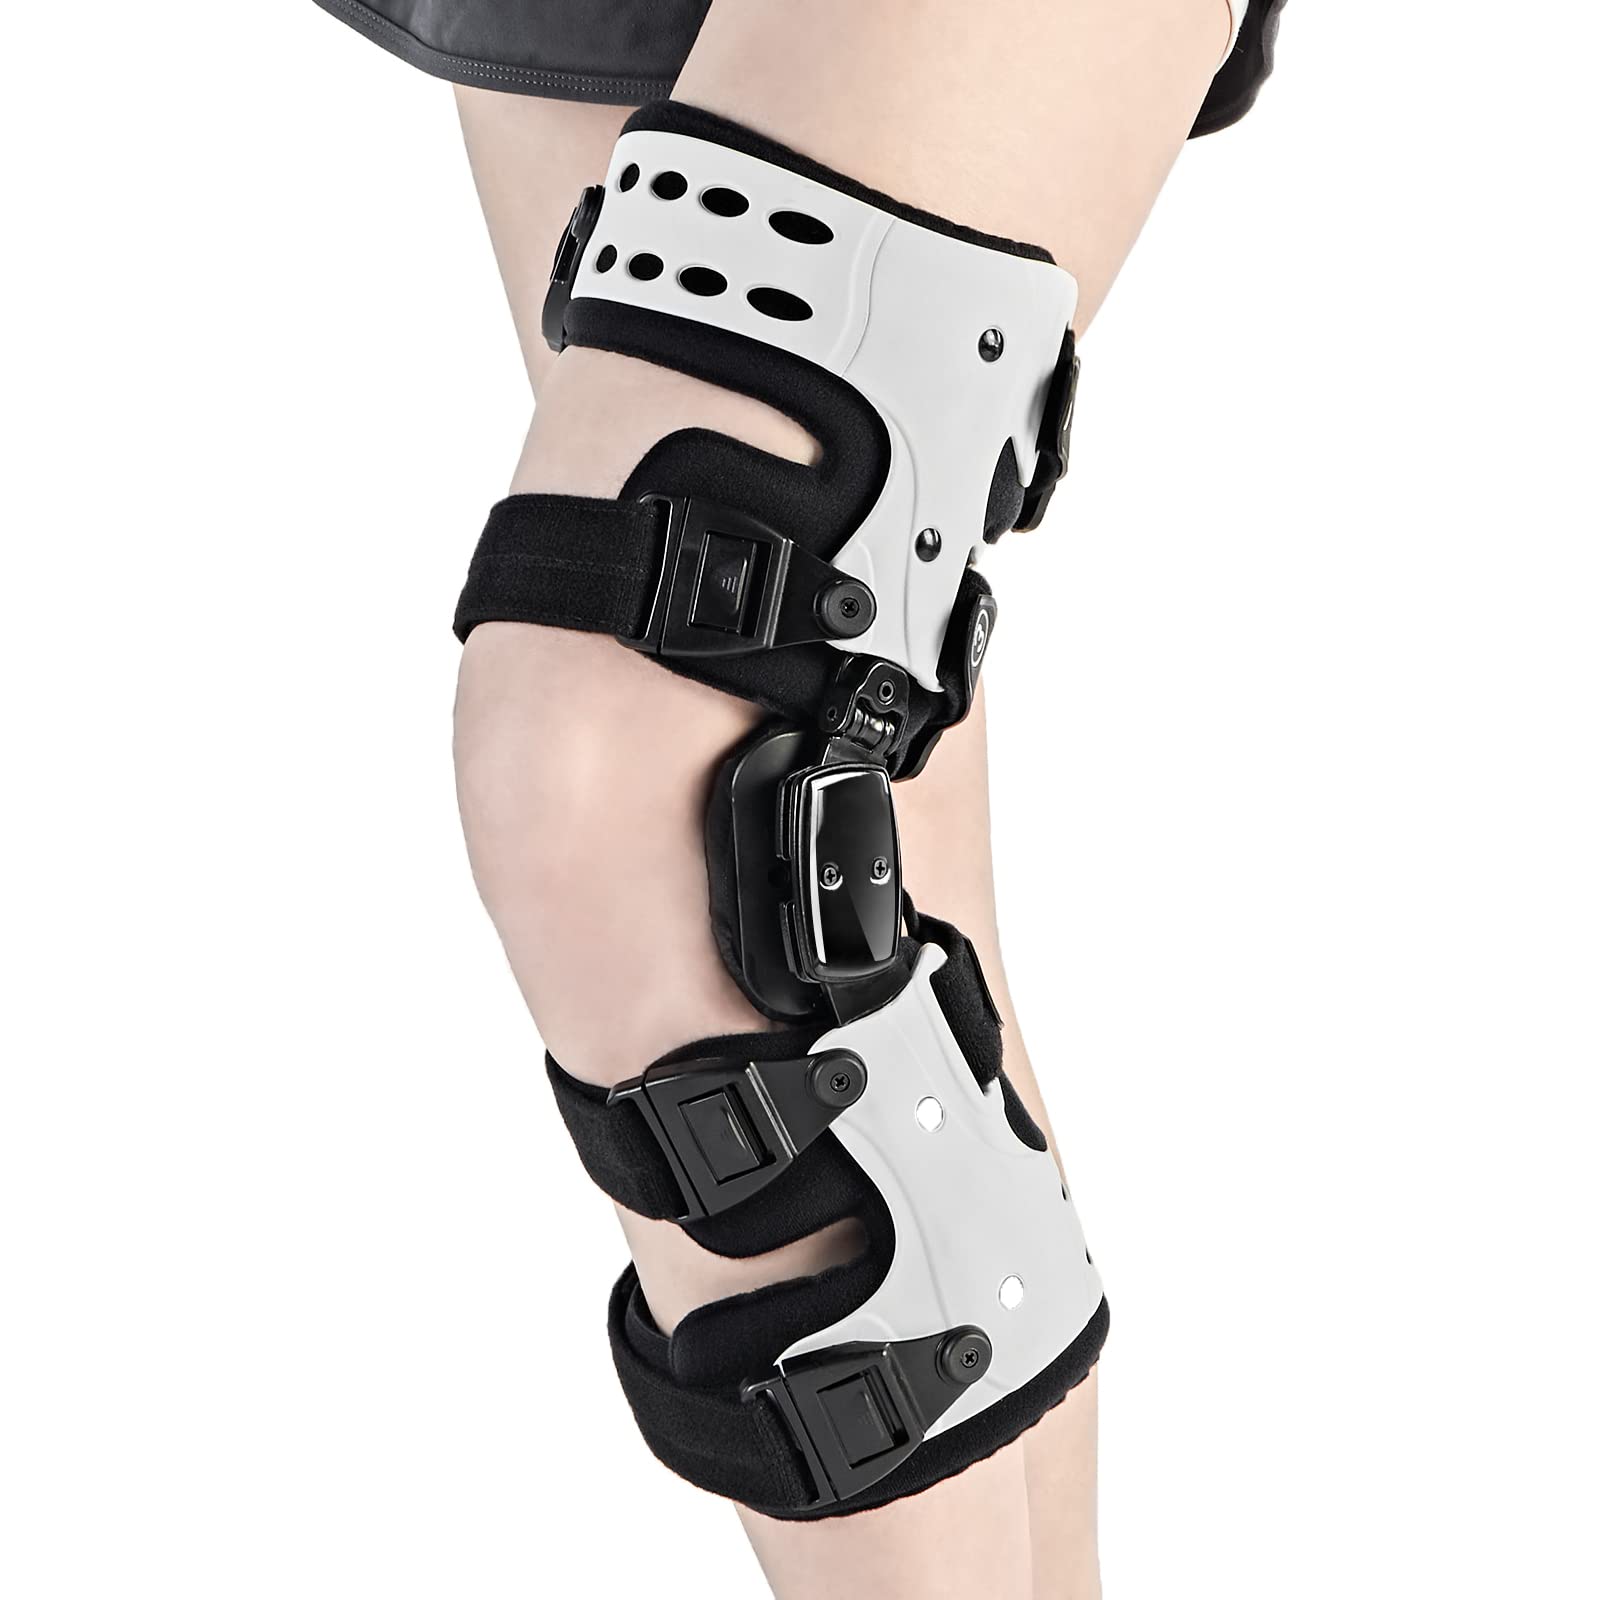 RISURRY OA Unloader Knee Brace - Arthritis Pain Relief Osteoarthritis Bone  on Bone Knee Joint Pain Cartilage Defect Repair Avascular Necrosis Hinged  Medial or Lateral Degeneration (Black+White Universal-Left Leg) U